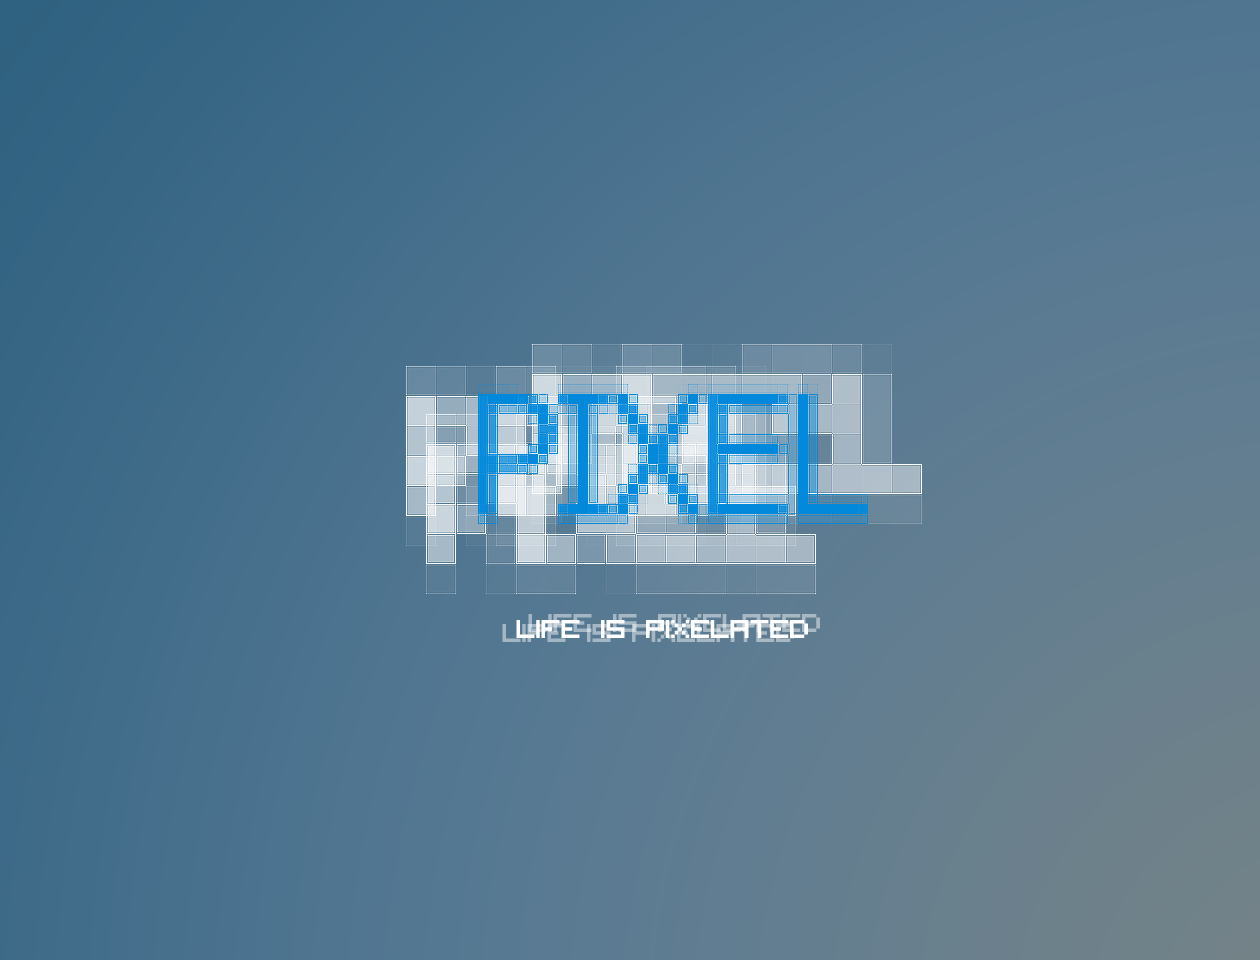 Pixel wallpaper by ~Vic3-vs on deviantART